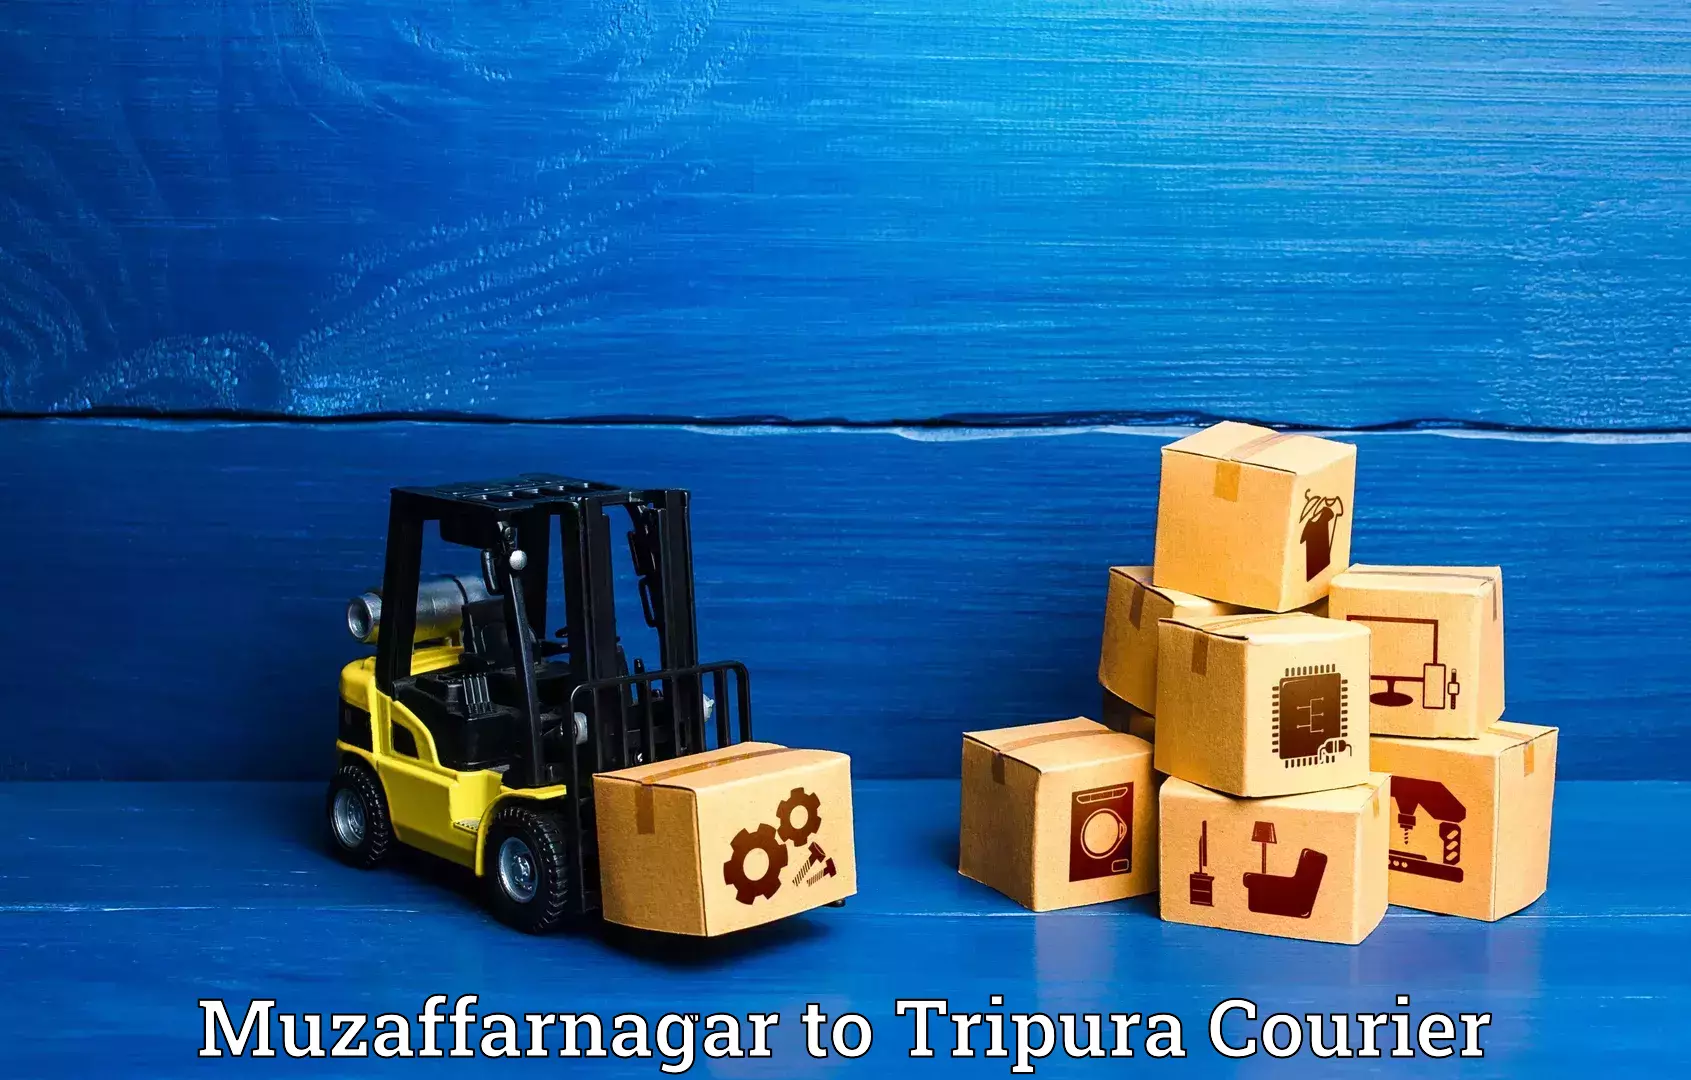 Urgent luggage shipment in Muzaffarnagar to Tripura